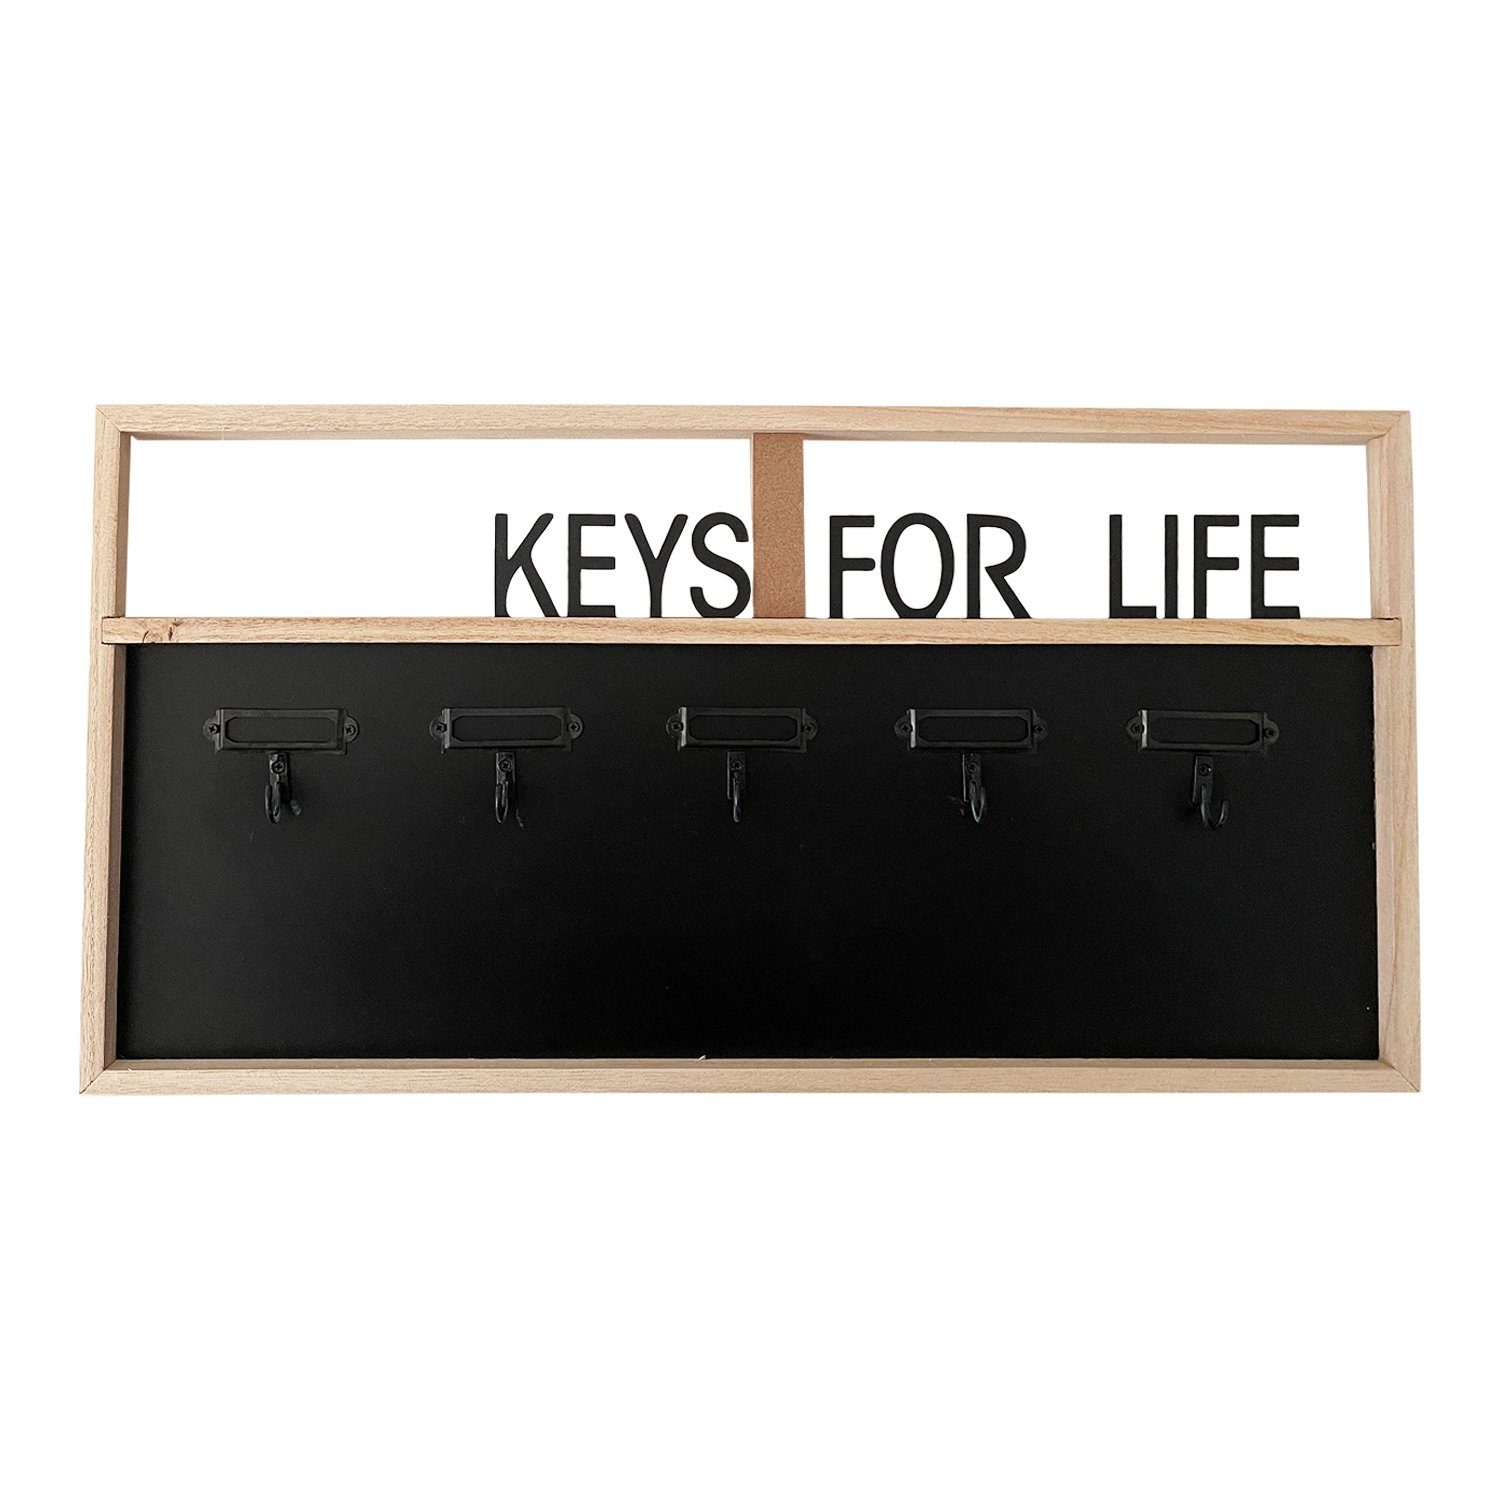 Mojawo Schlüsselkasten Holz Schlüsselboard Schlüsselbrett Schlüsselleiste Haken Schwarz B50xH26xT2cm